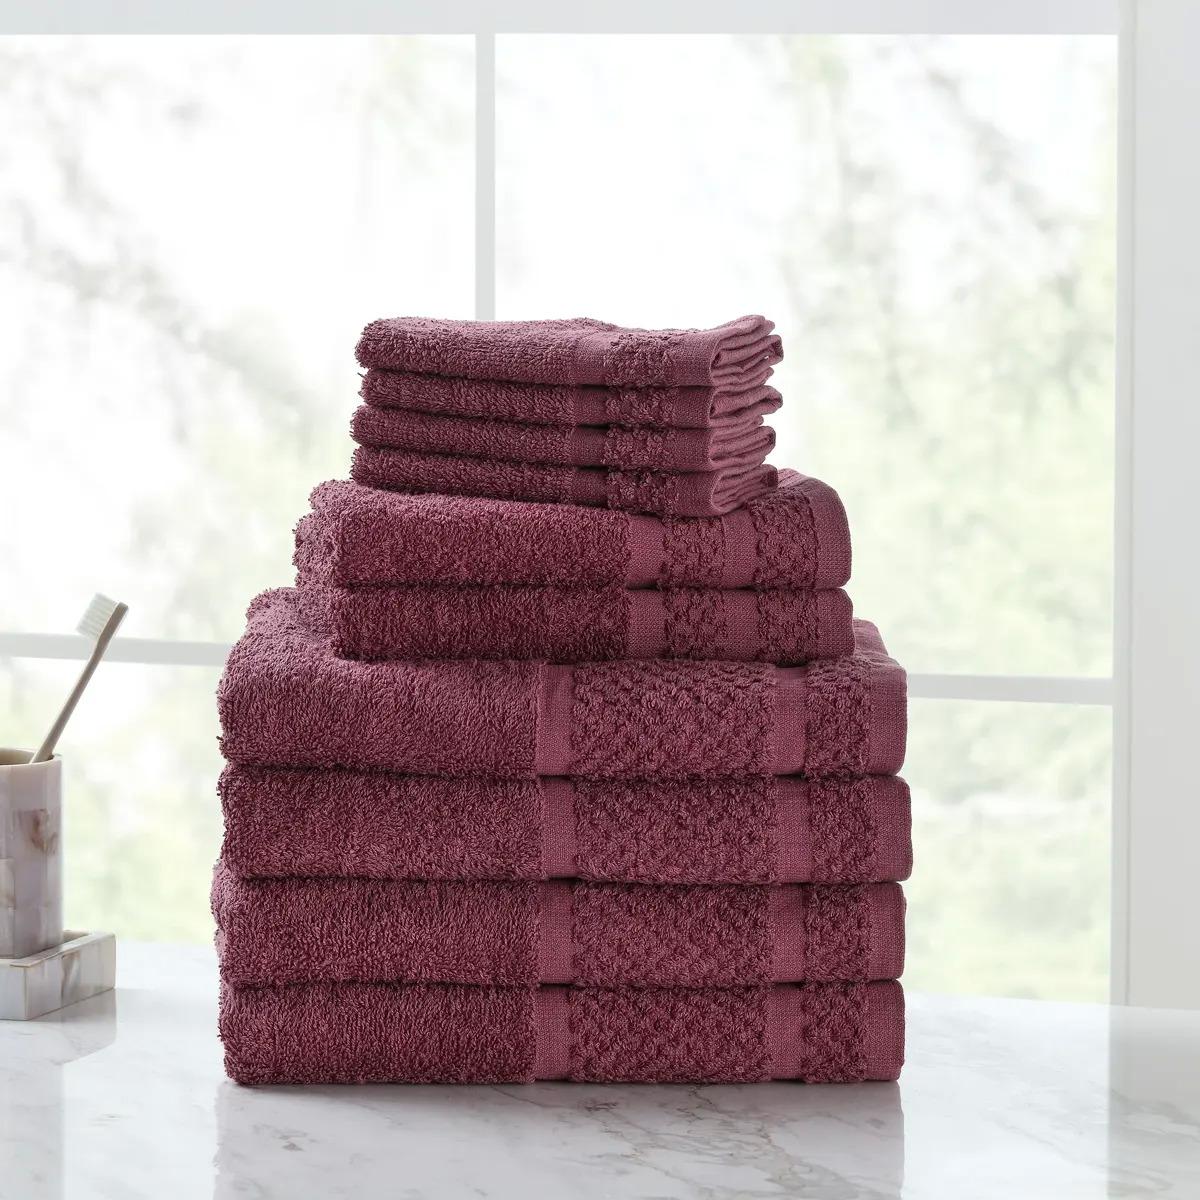 Mainstays 10-Piece Bath Towel Set for $8.97